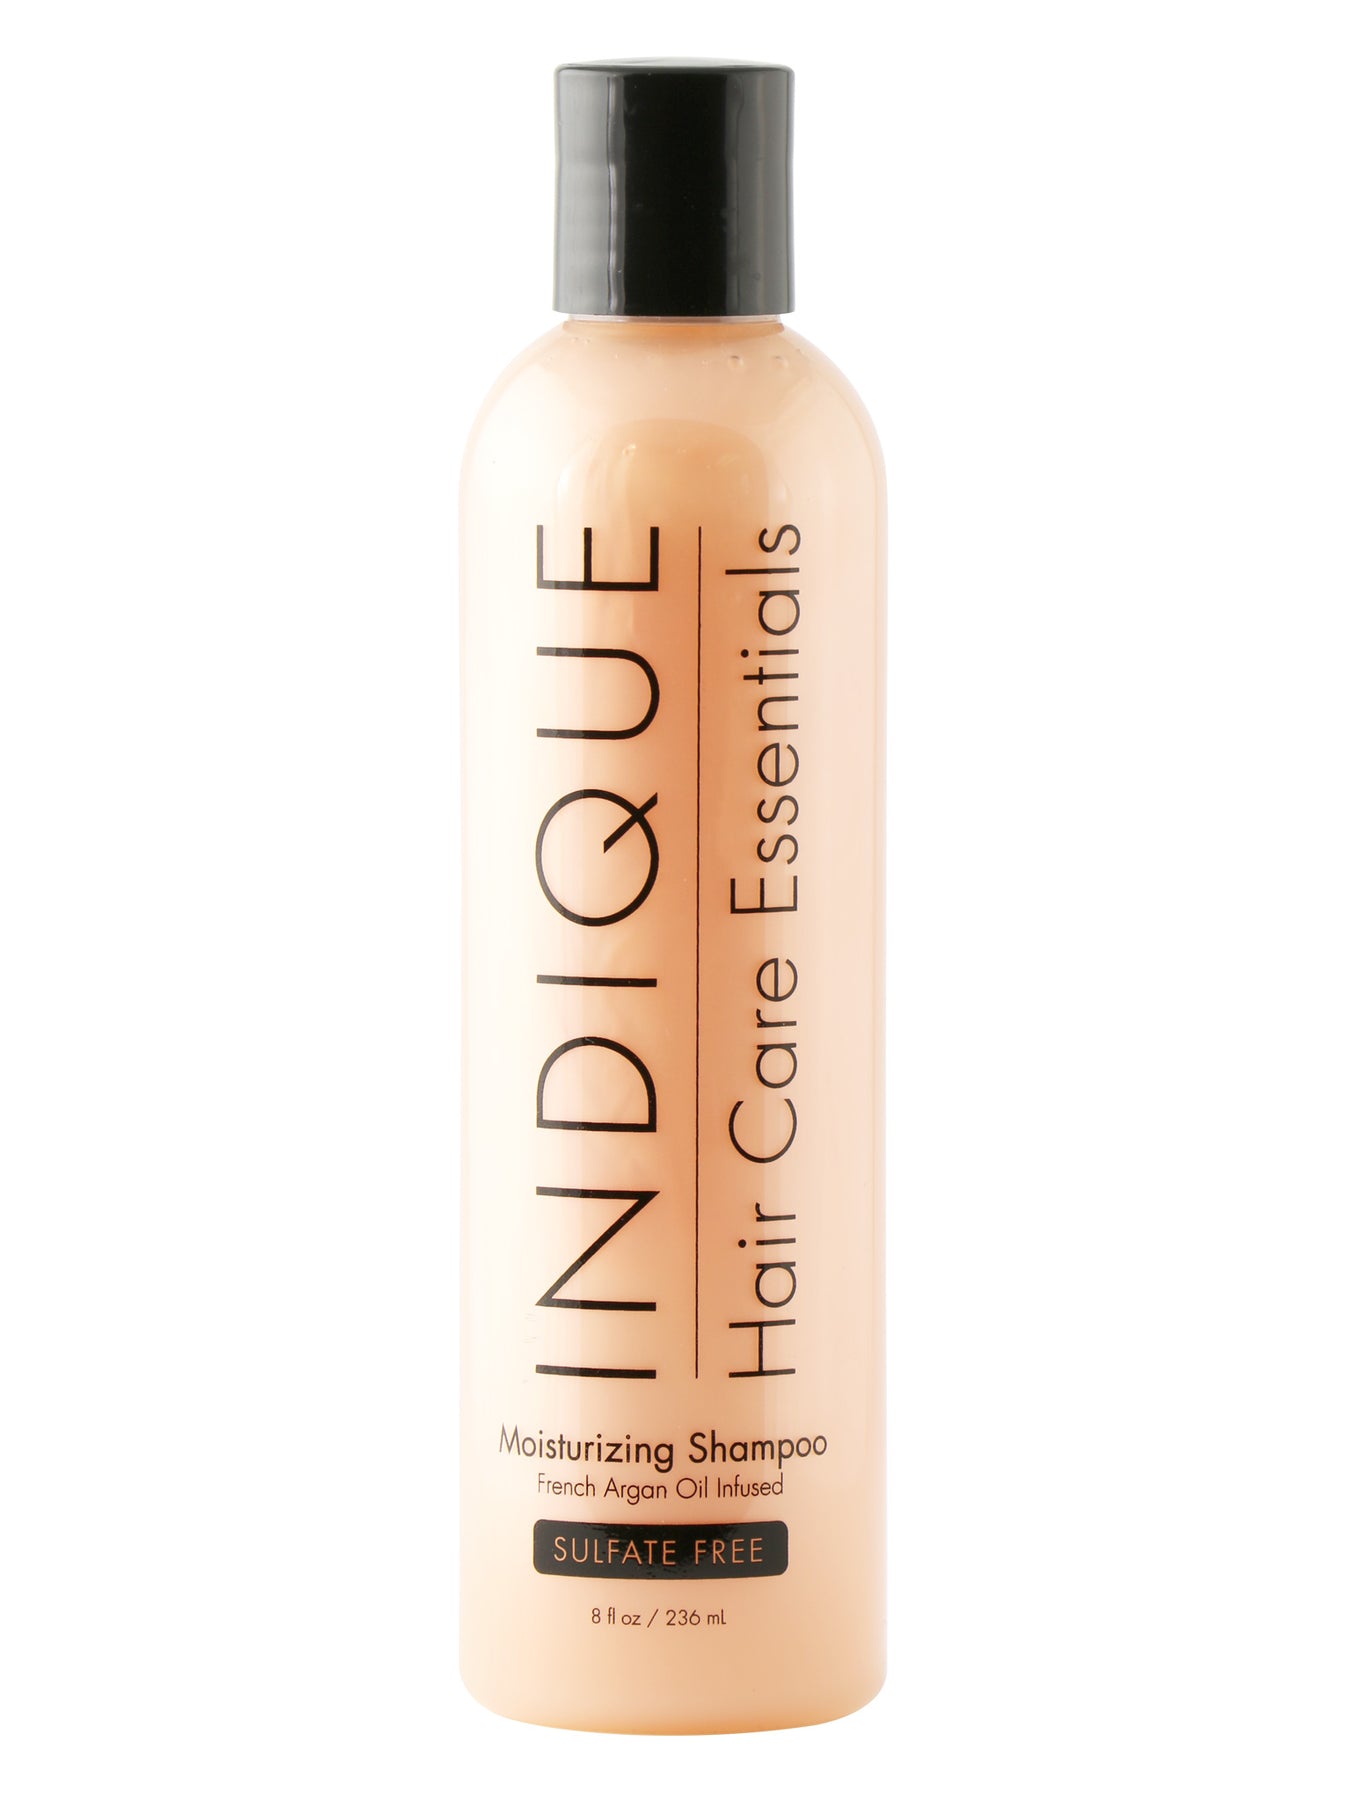 Use Indique Hair Moisturizing Shampoo for Long-Lasting Beauty